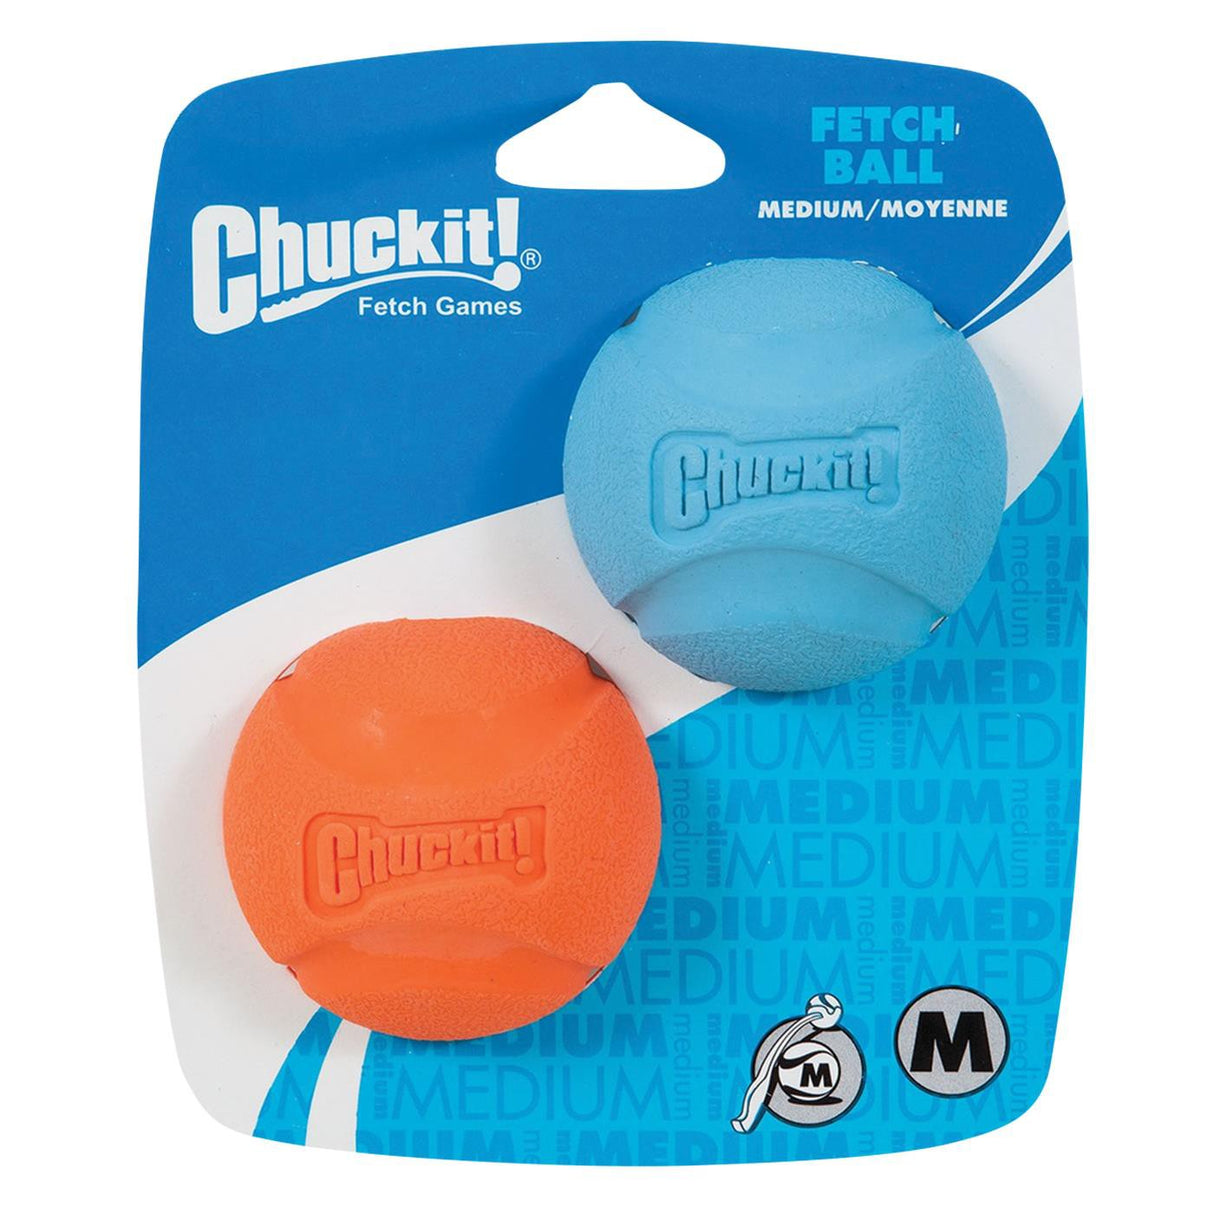 Chuck It Fetch Ball Medium - Pack of 2